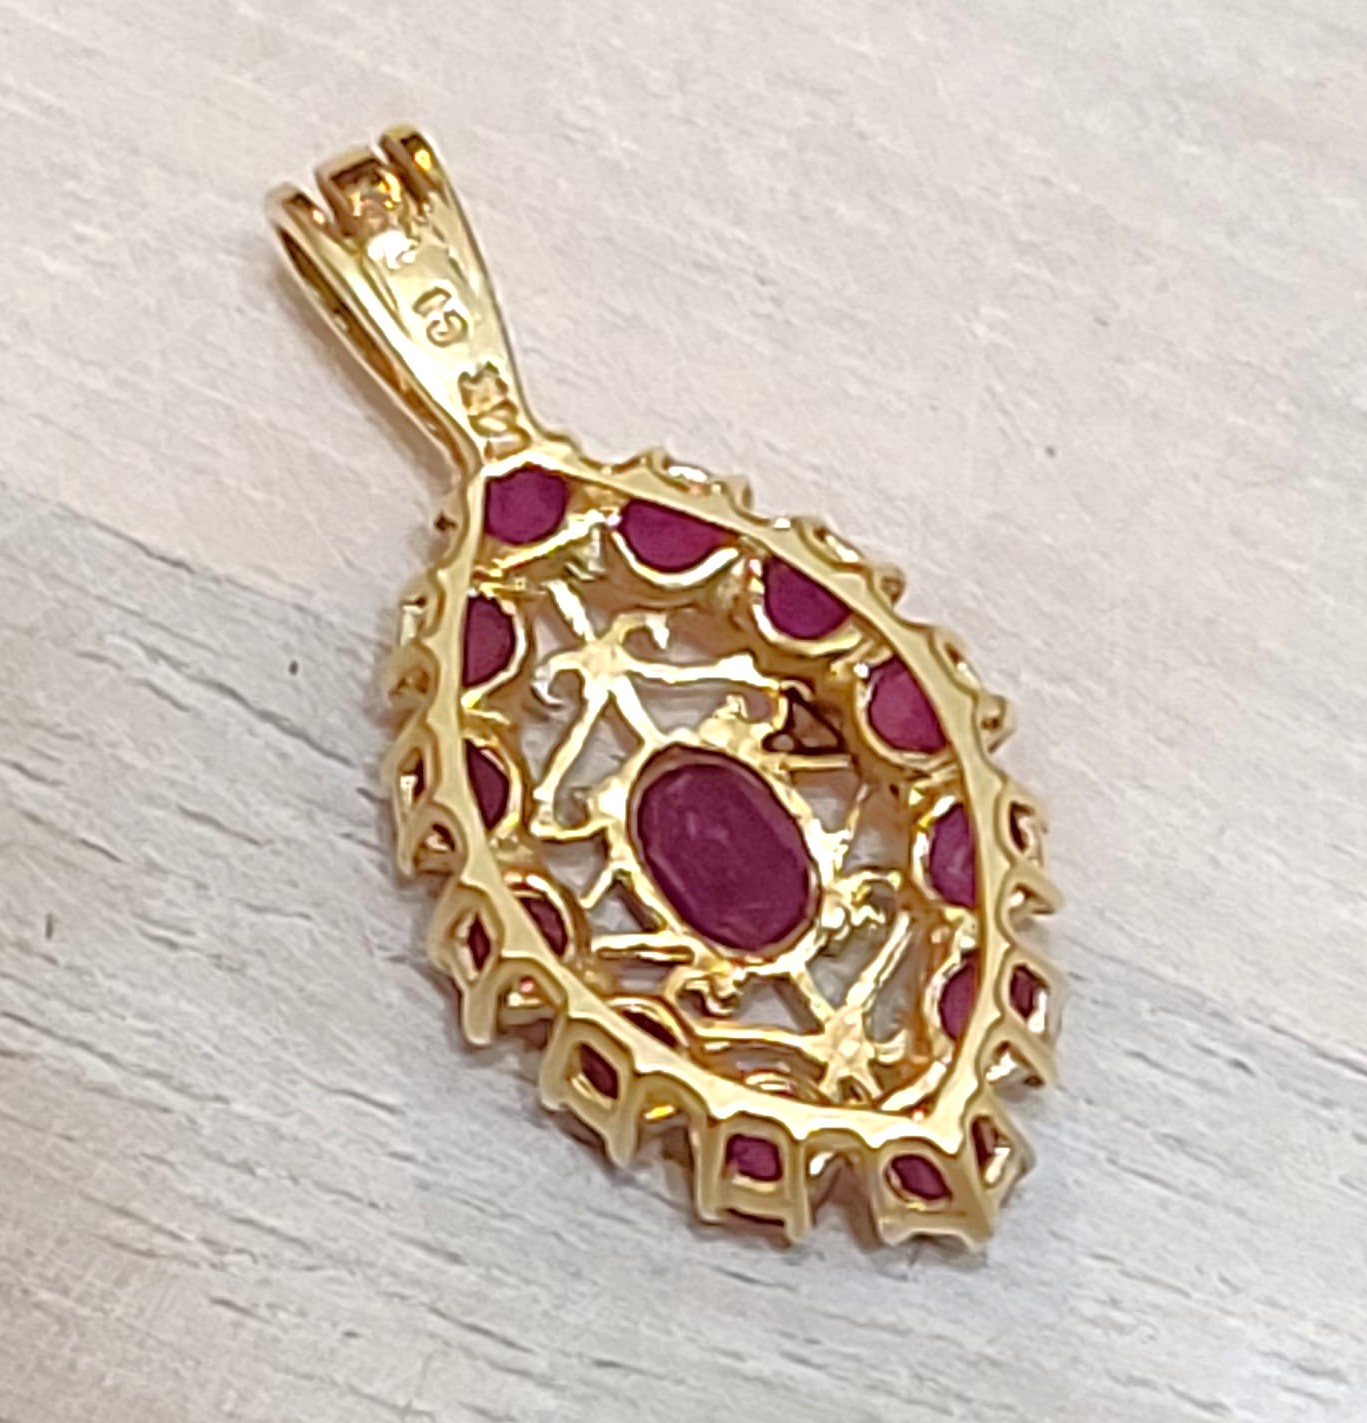 14K gold pendant with genuine ruby gemestones